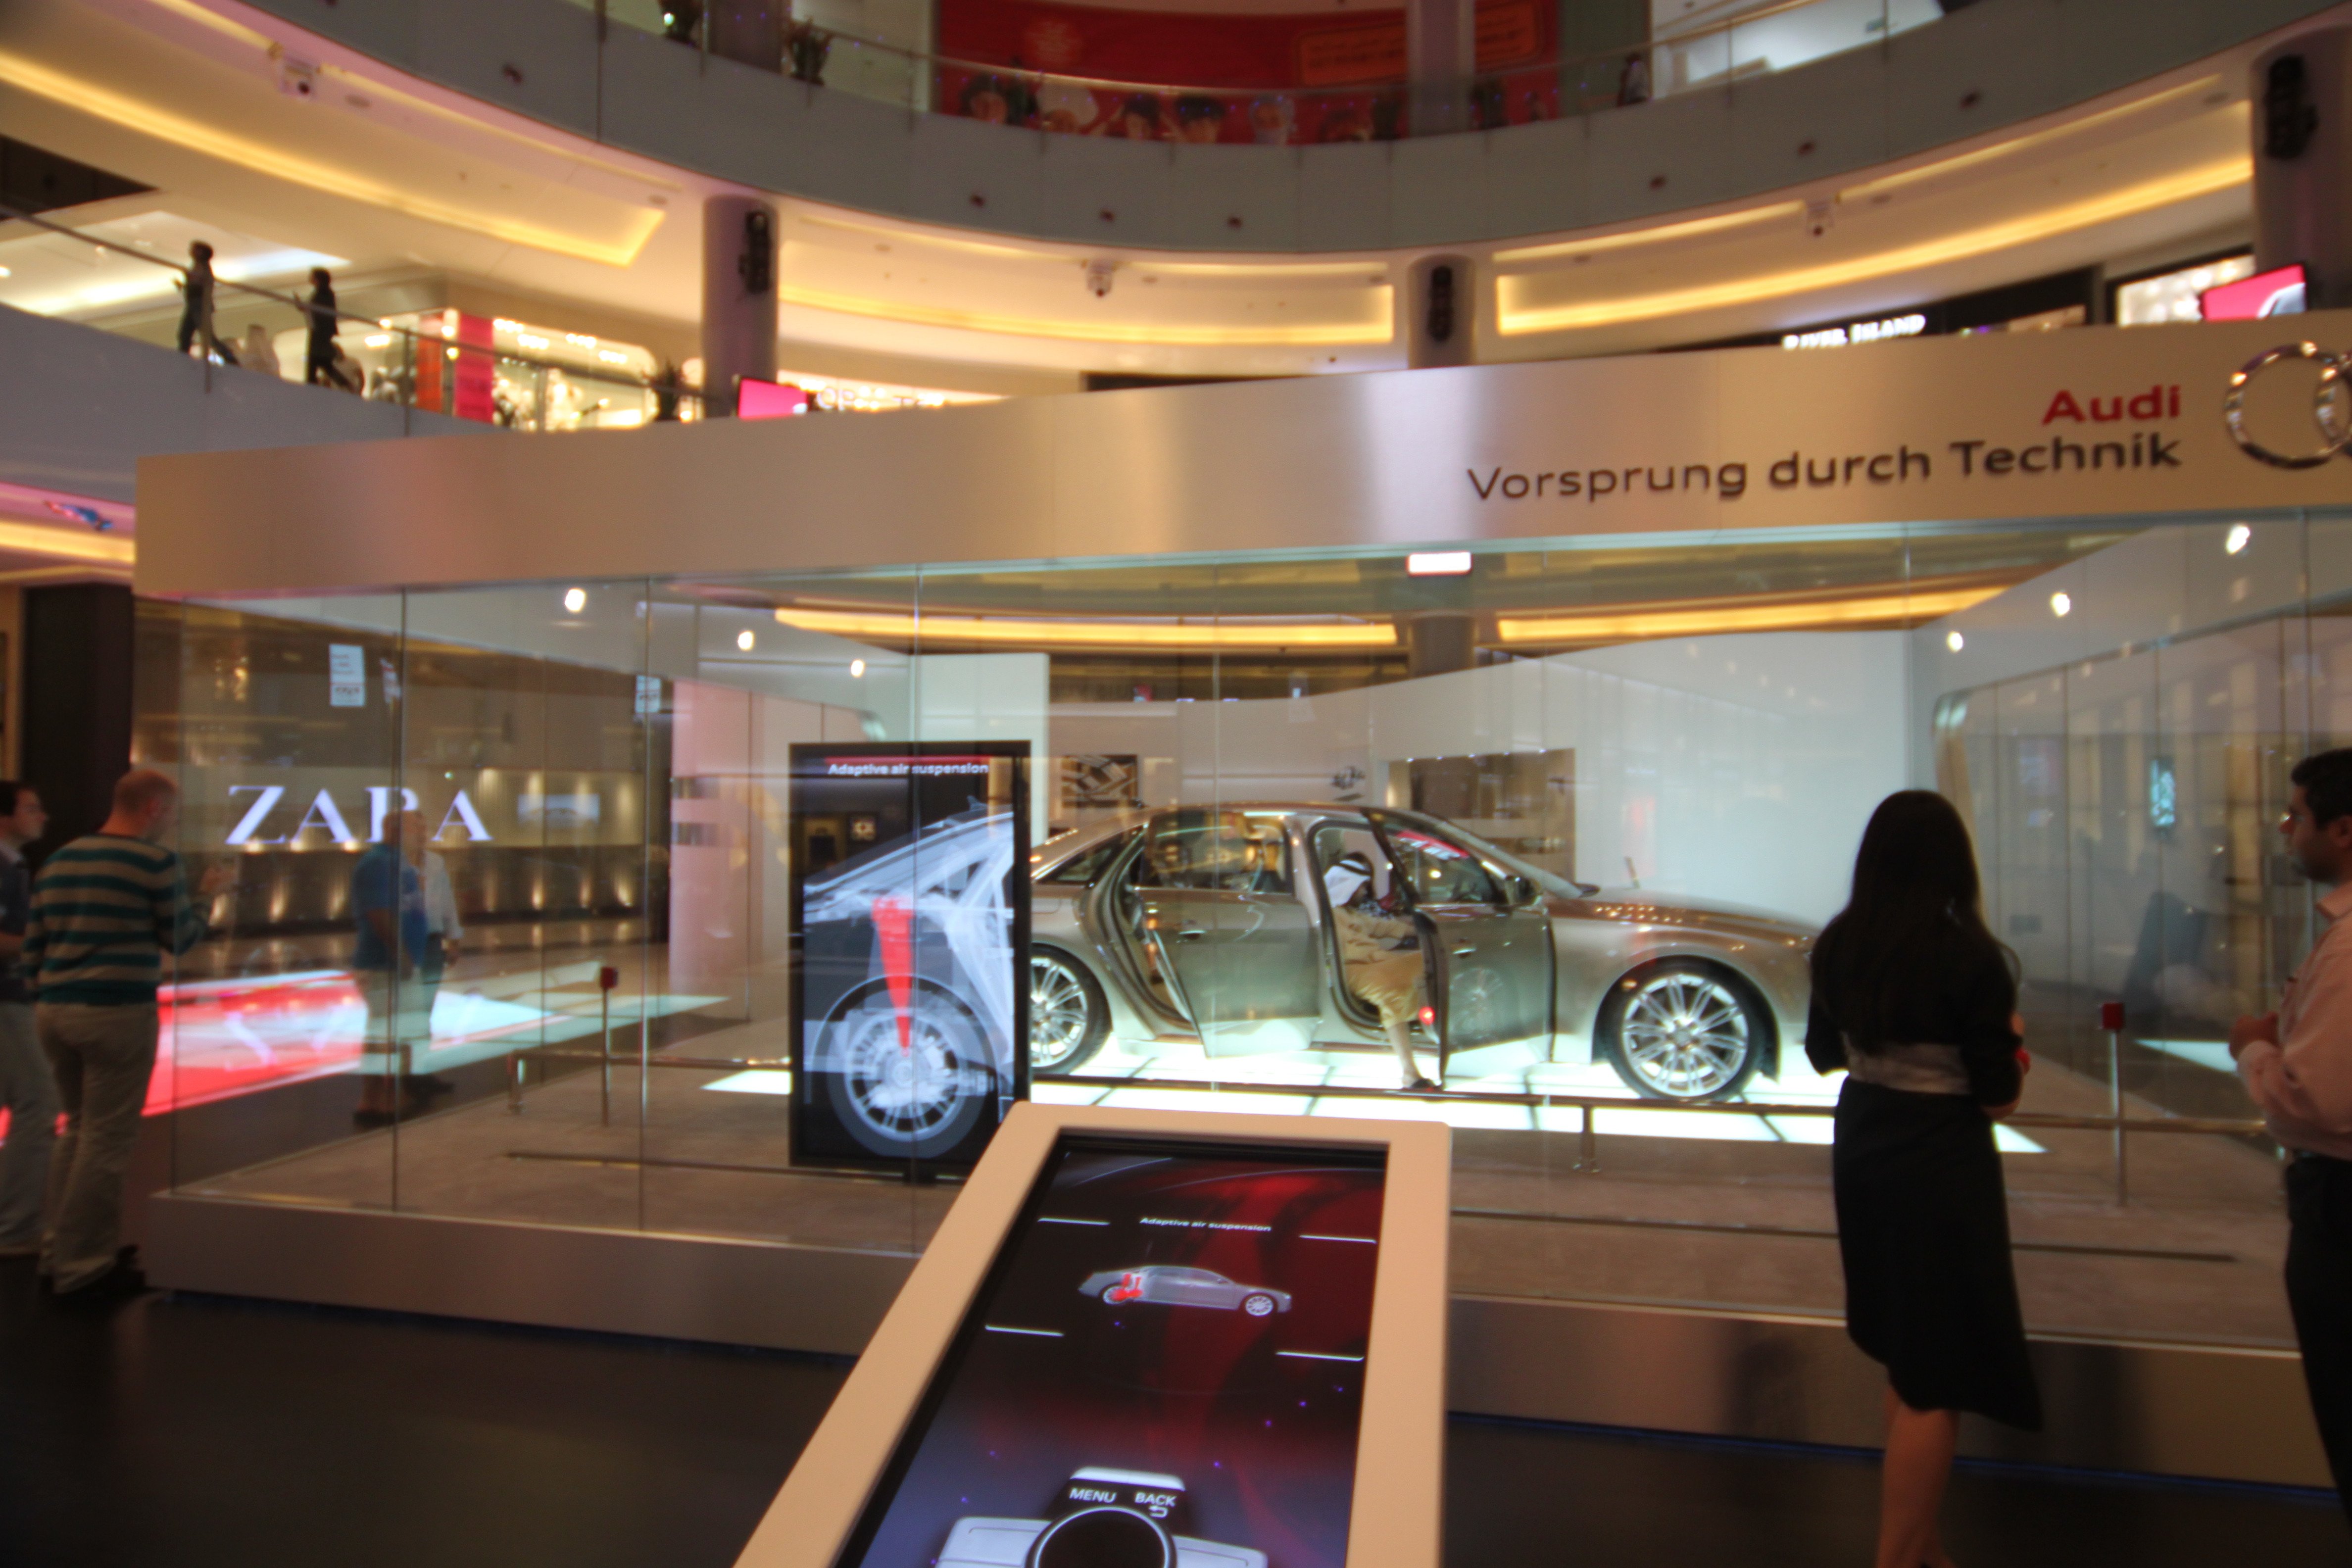 Audi's x-ray concept at Dubai Mall (Photo: invidis)